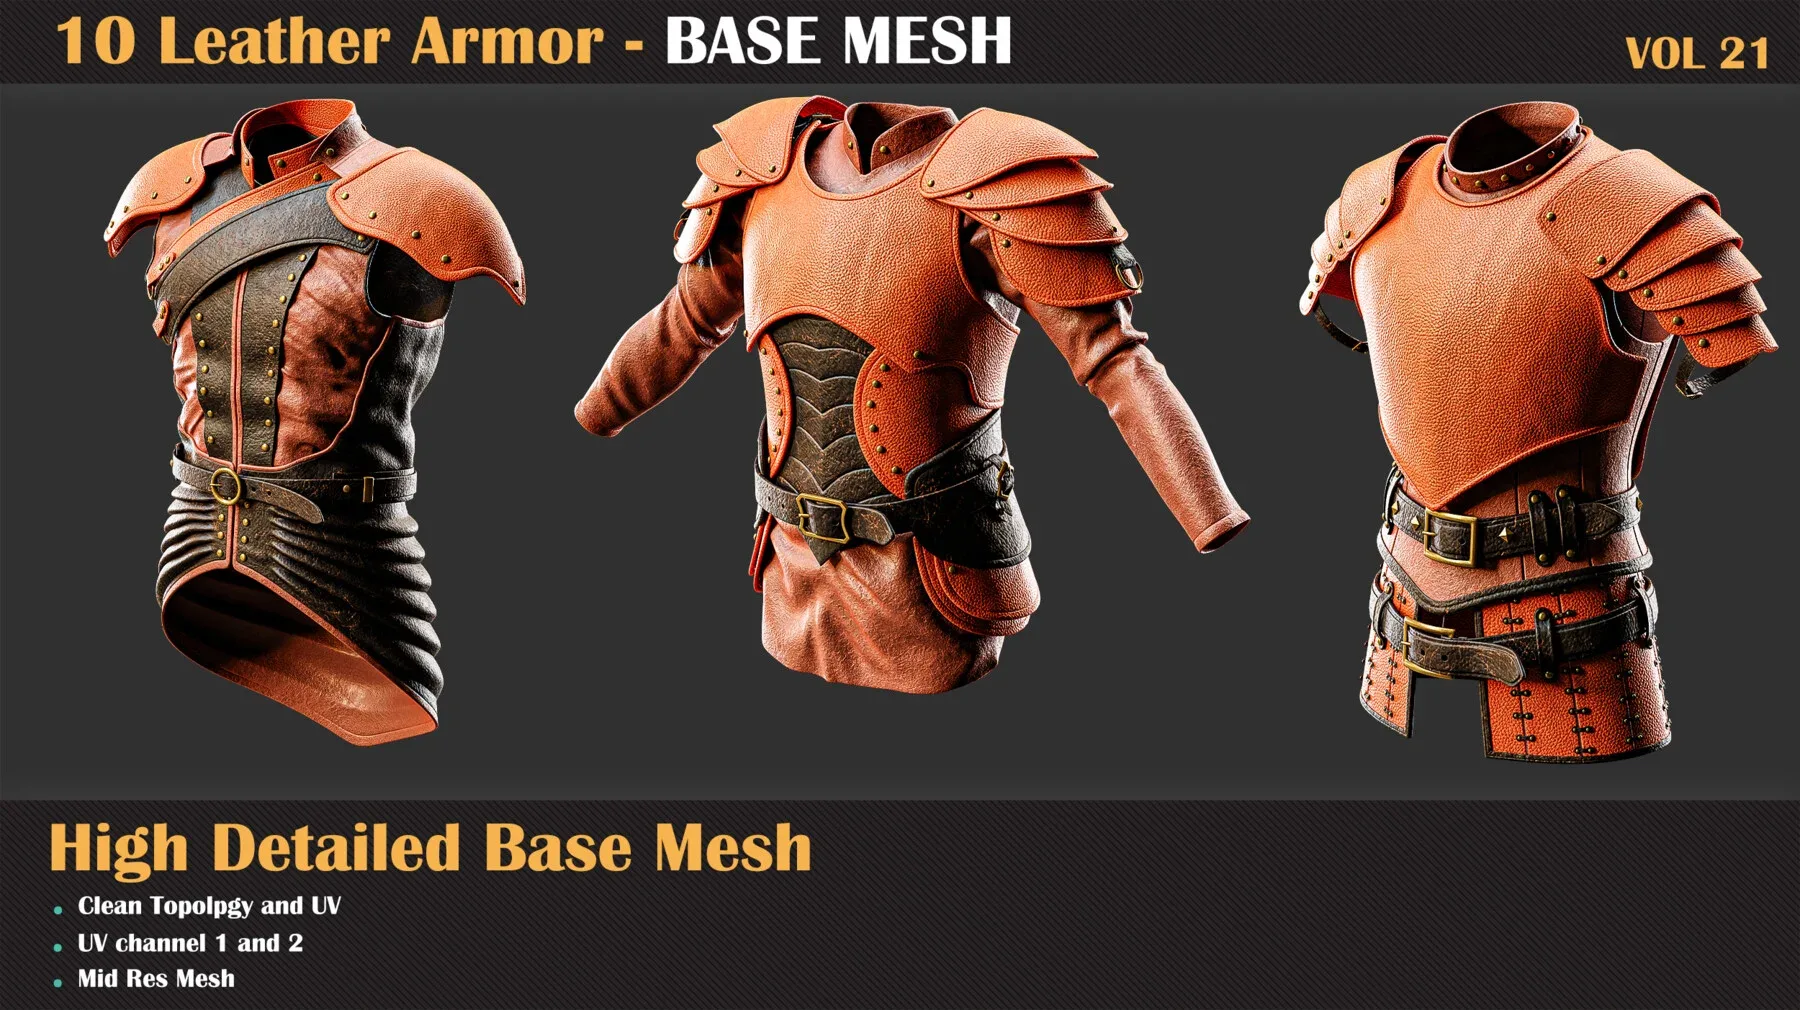 10 High Detail Leather Armor BASE MESH - VOL 21